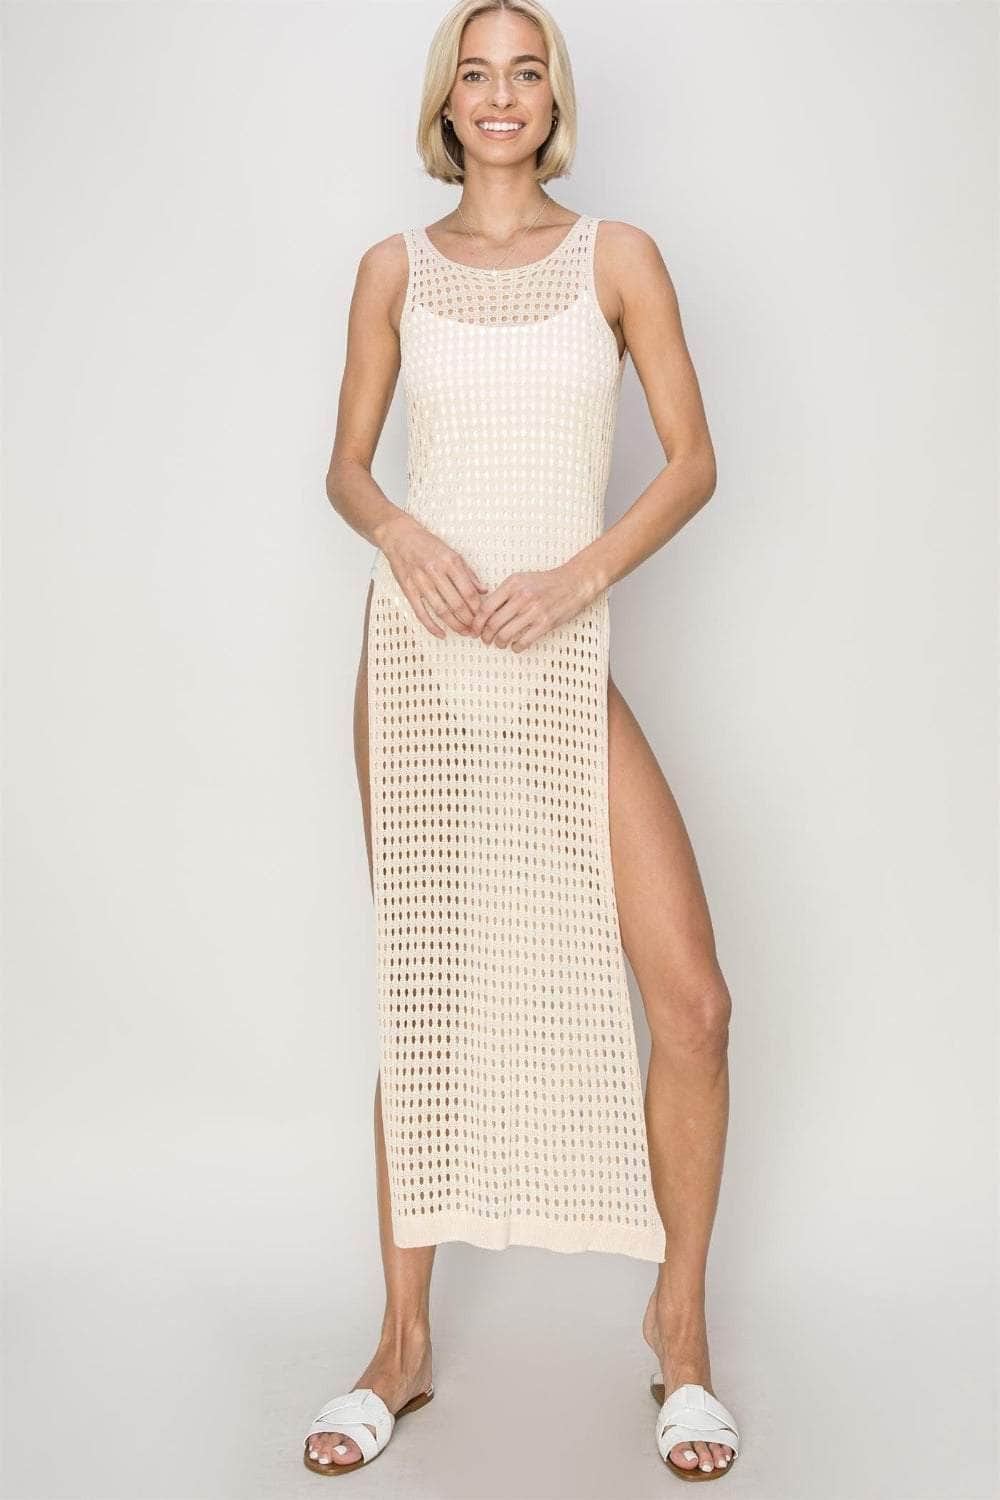 HYFVE Crochet Backless Cover Up Dress Beige / S